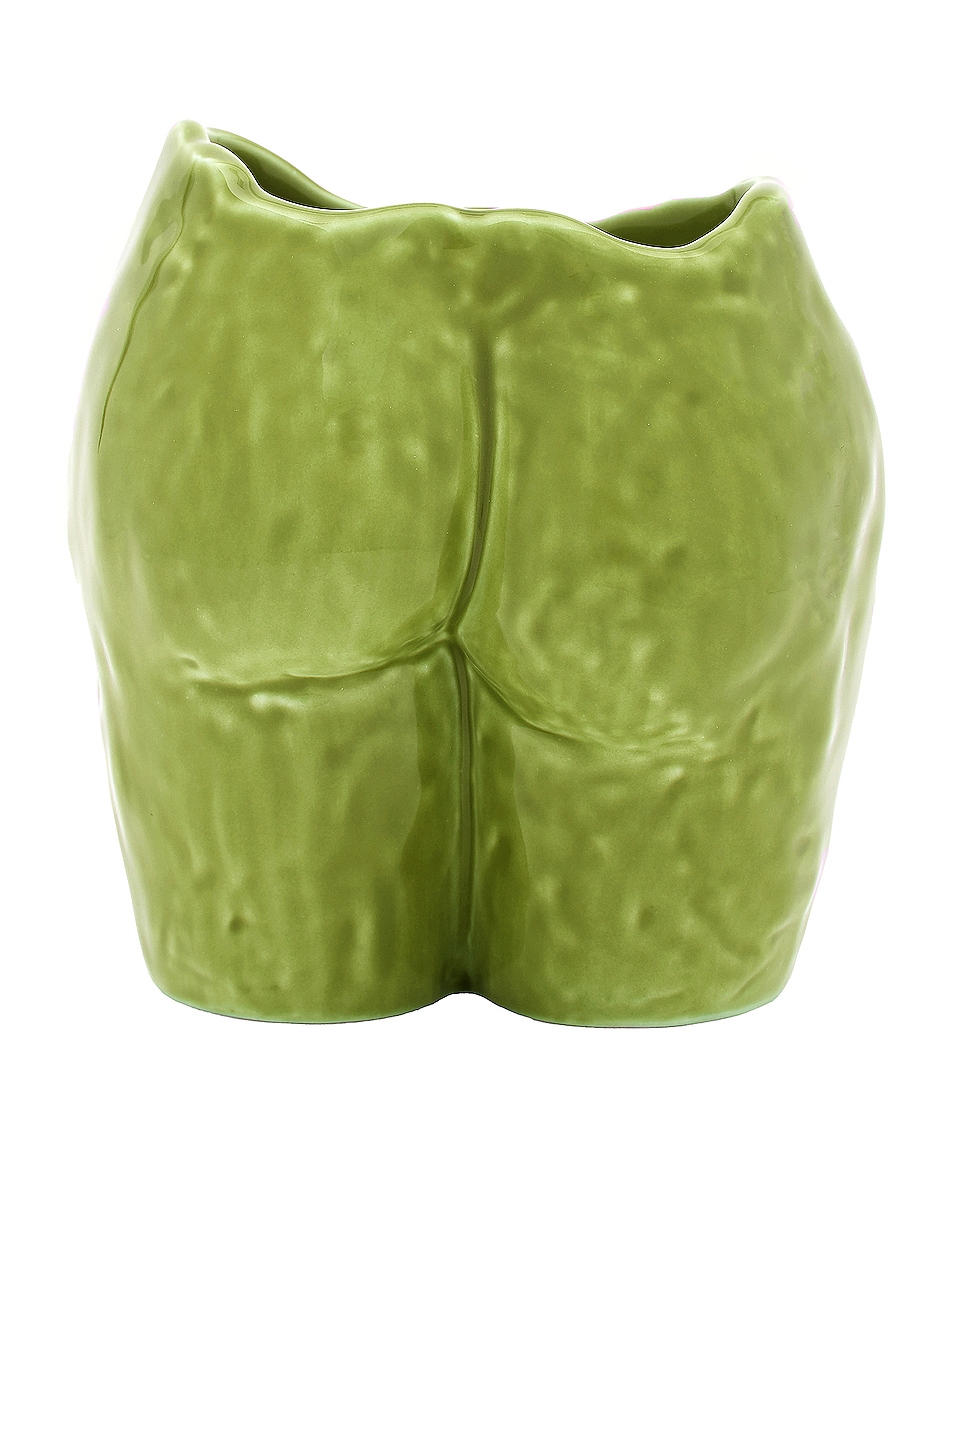 Image 1 of Anissa Kermiche Popotin Pot in Olive